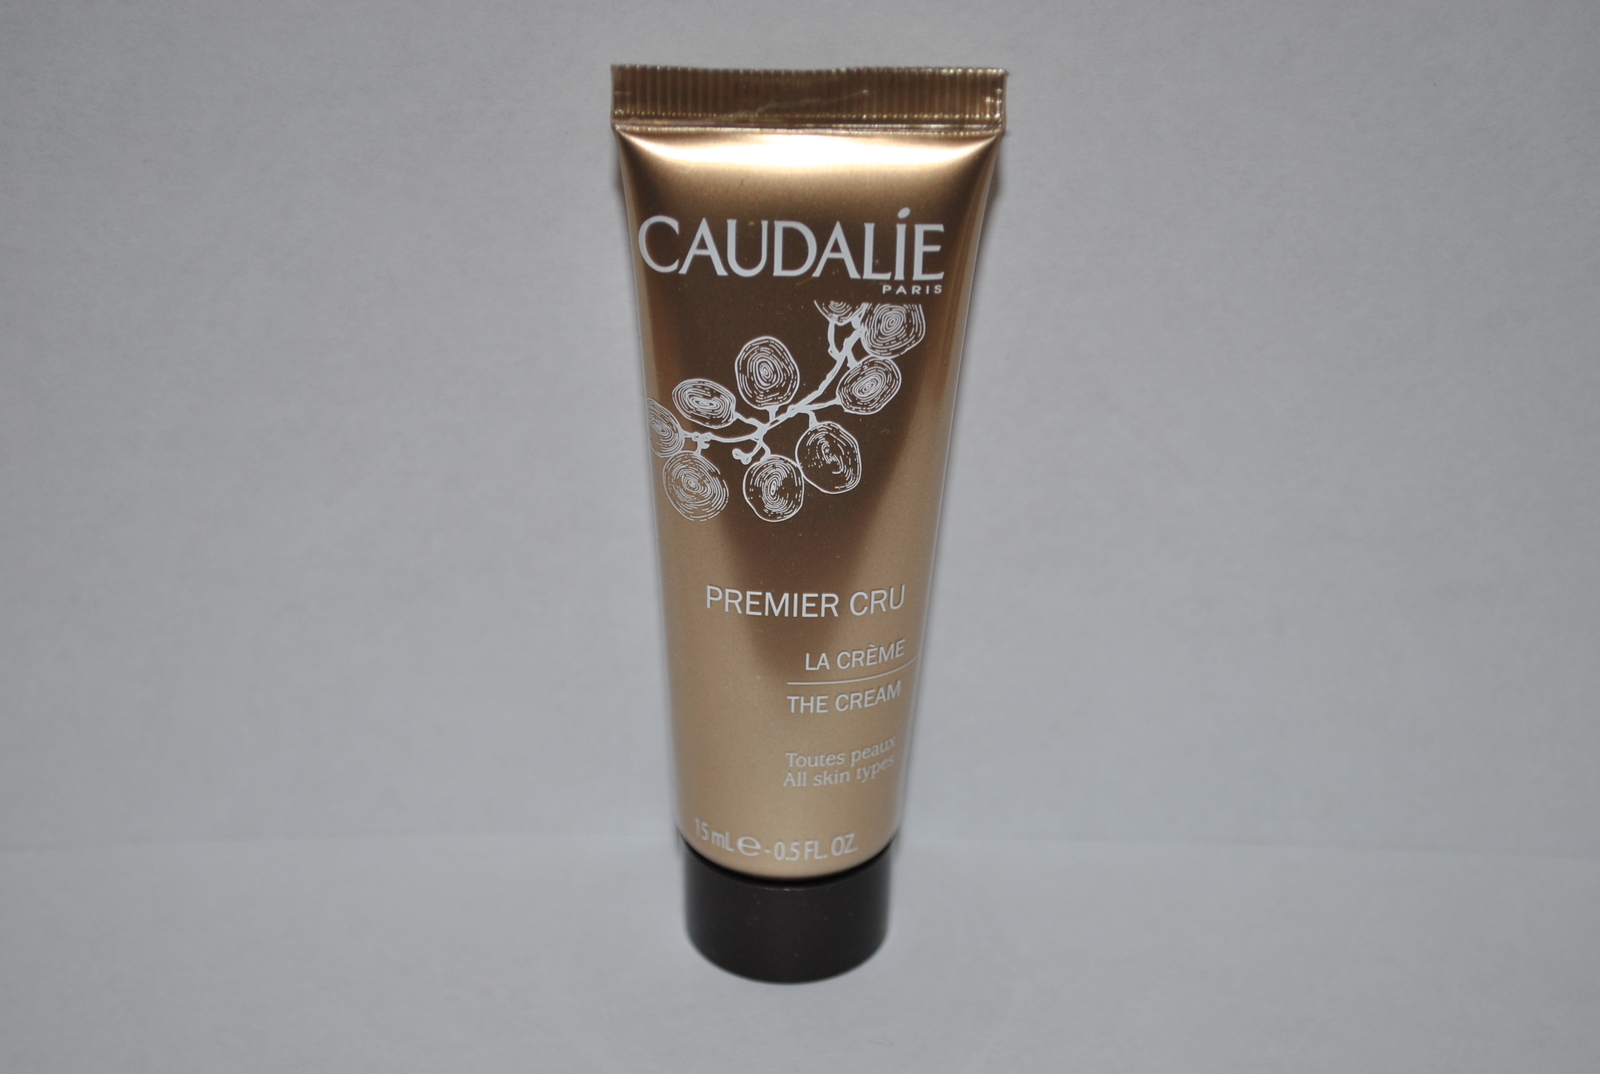 Caudalie Premier Cru The Cream 0.5 fl oz / 15 ml - $24.99